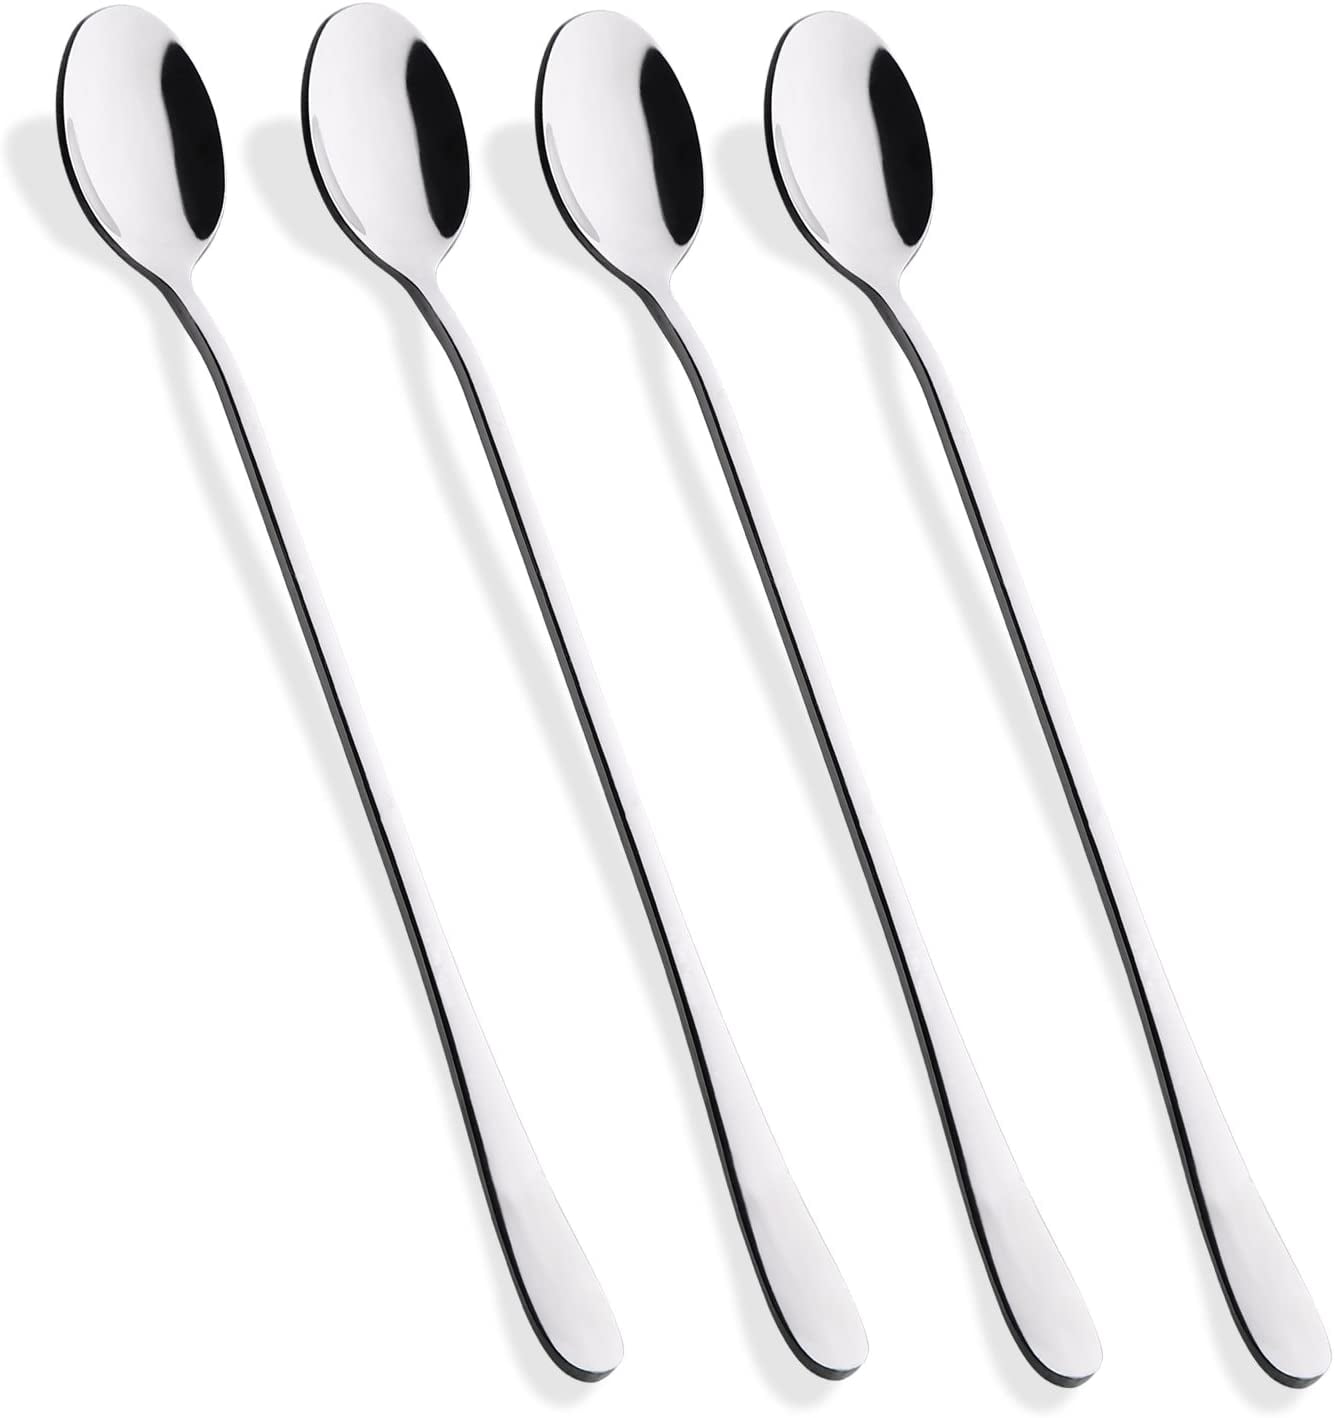 Stainless Steel Long Handle Heart Spoon Stirring Small Spoon Coffee Spoon 